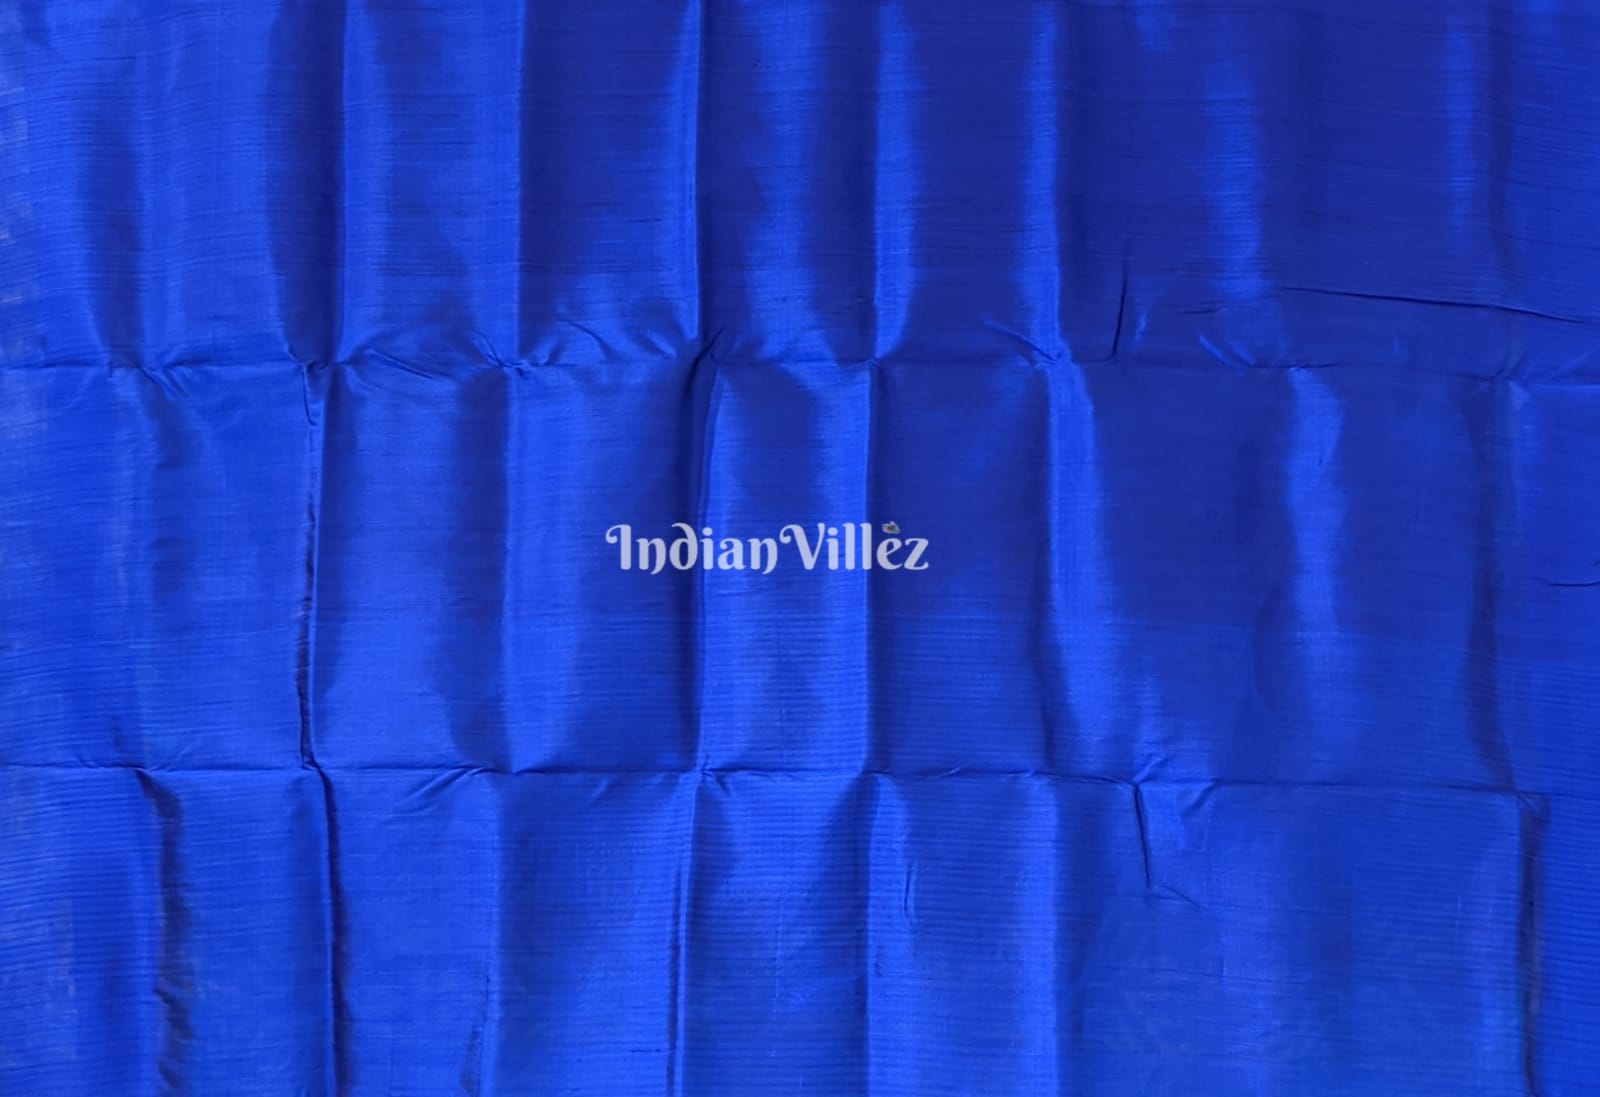 Turquoise Blue Odisha Handloom Contemporary Silk Saree